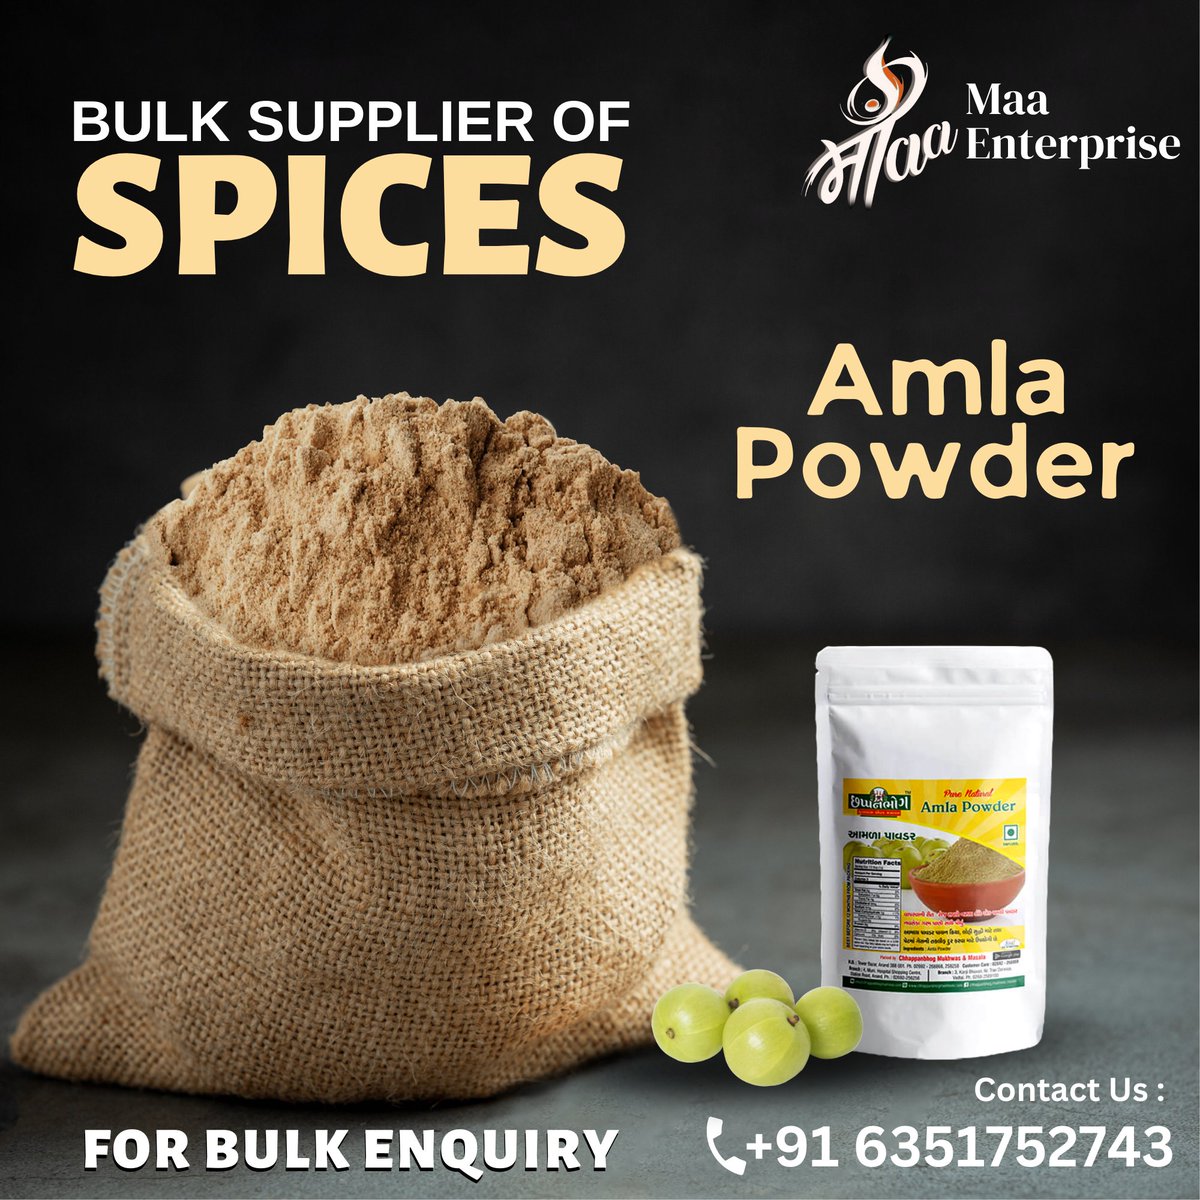 ' Bulk Supplier Of Spices '
.
FOR BULK PURCHASING
Contact Us :
+91 6351752743
Mail Us :
maaenterprise.anand@gmail.com
.
#AmlaPowder #amla #100PercentOrganic #OrganicAmla #NaturalRemedy #HealthyLiving #VitaminCBoost #HolisticHealth #Superfood #HerbalBeauty #ayurveda #health #amla